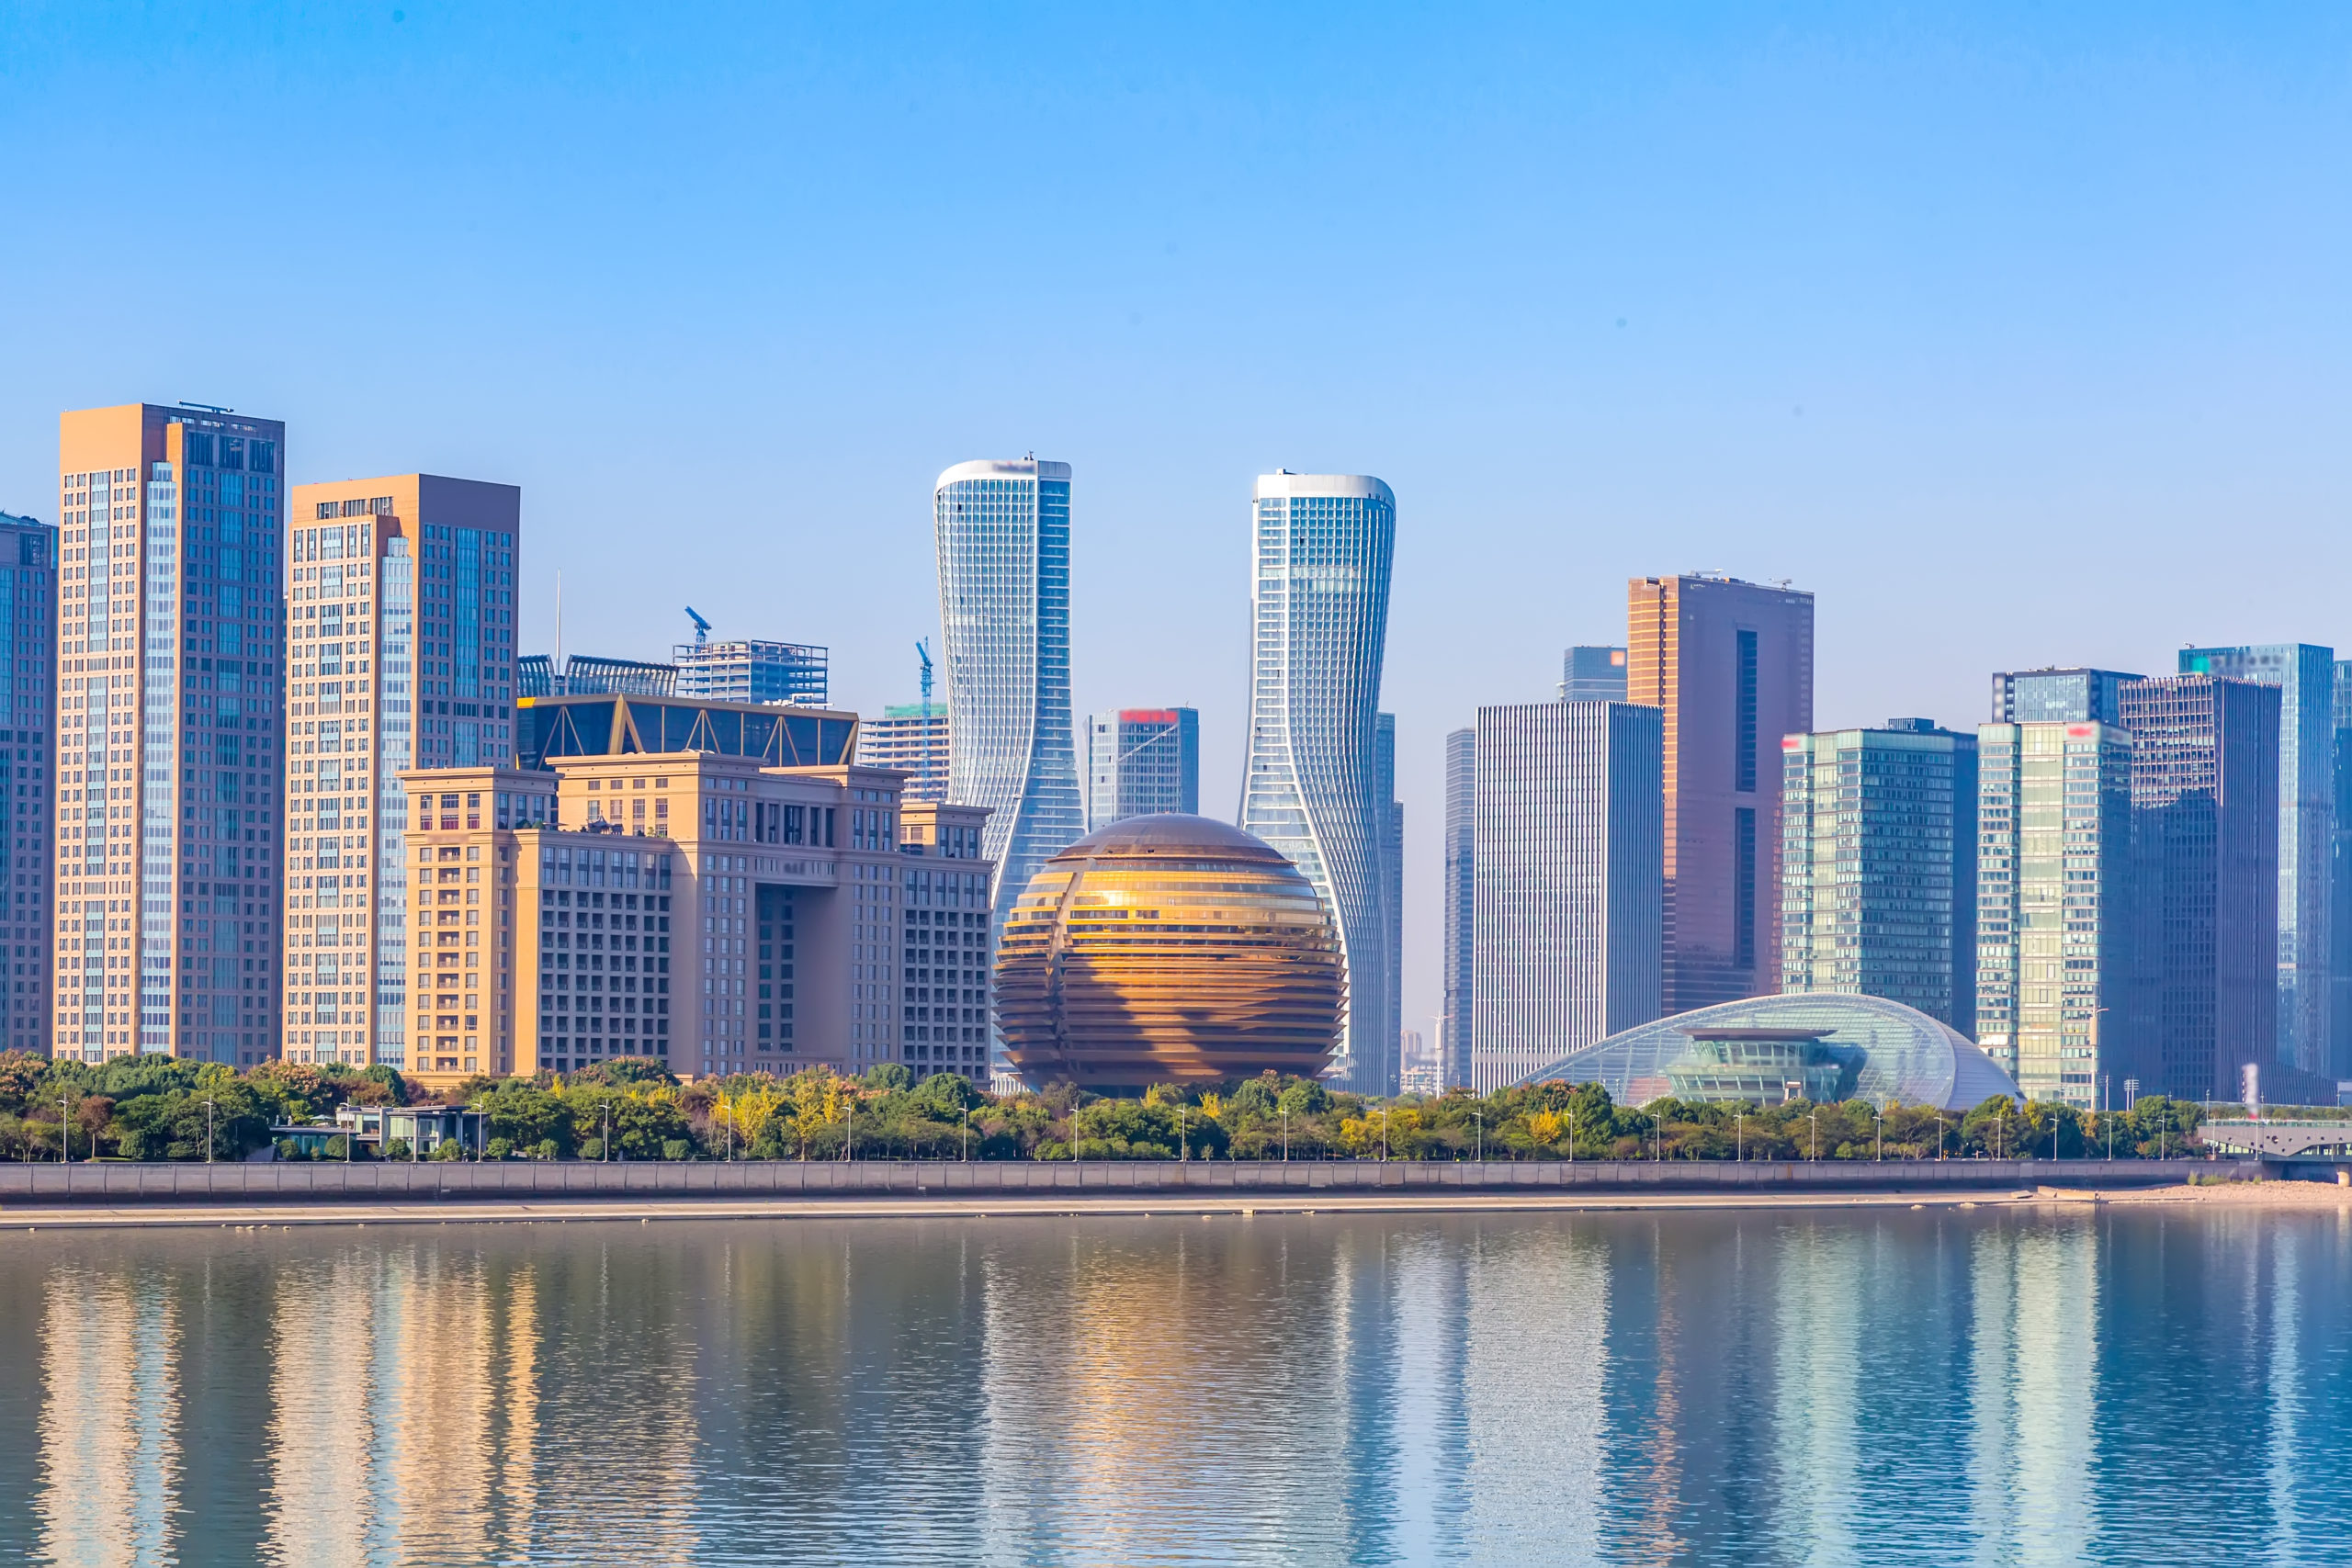 China's emerging city rankings 2022